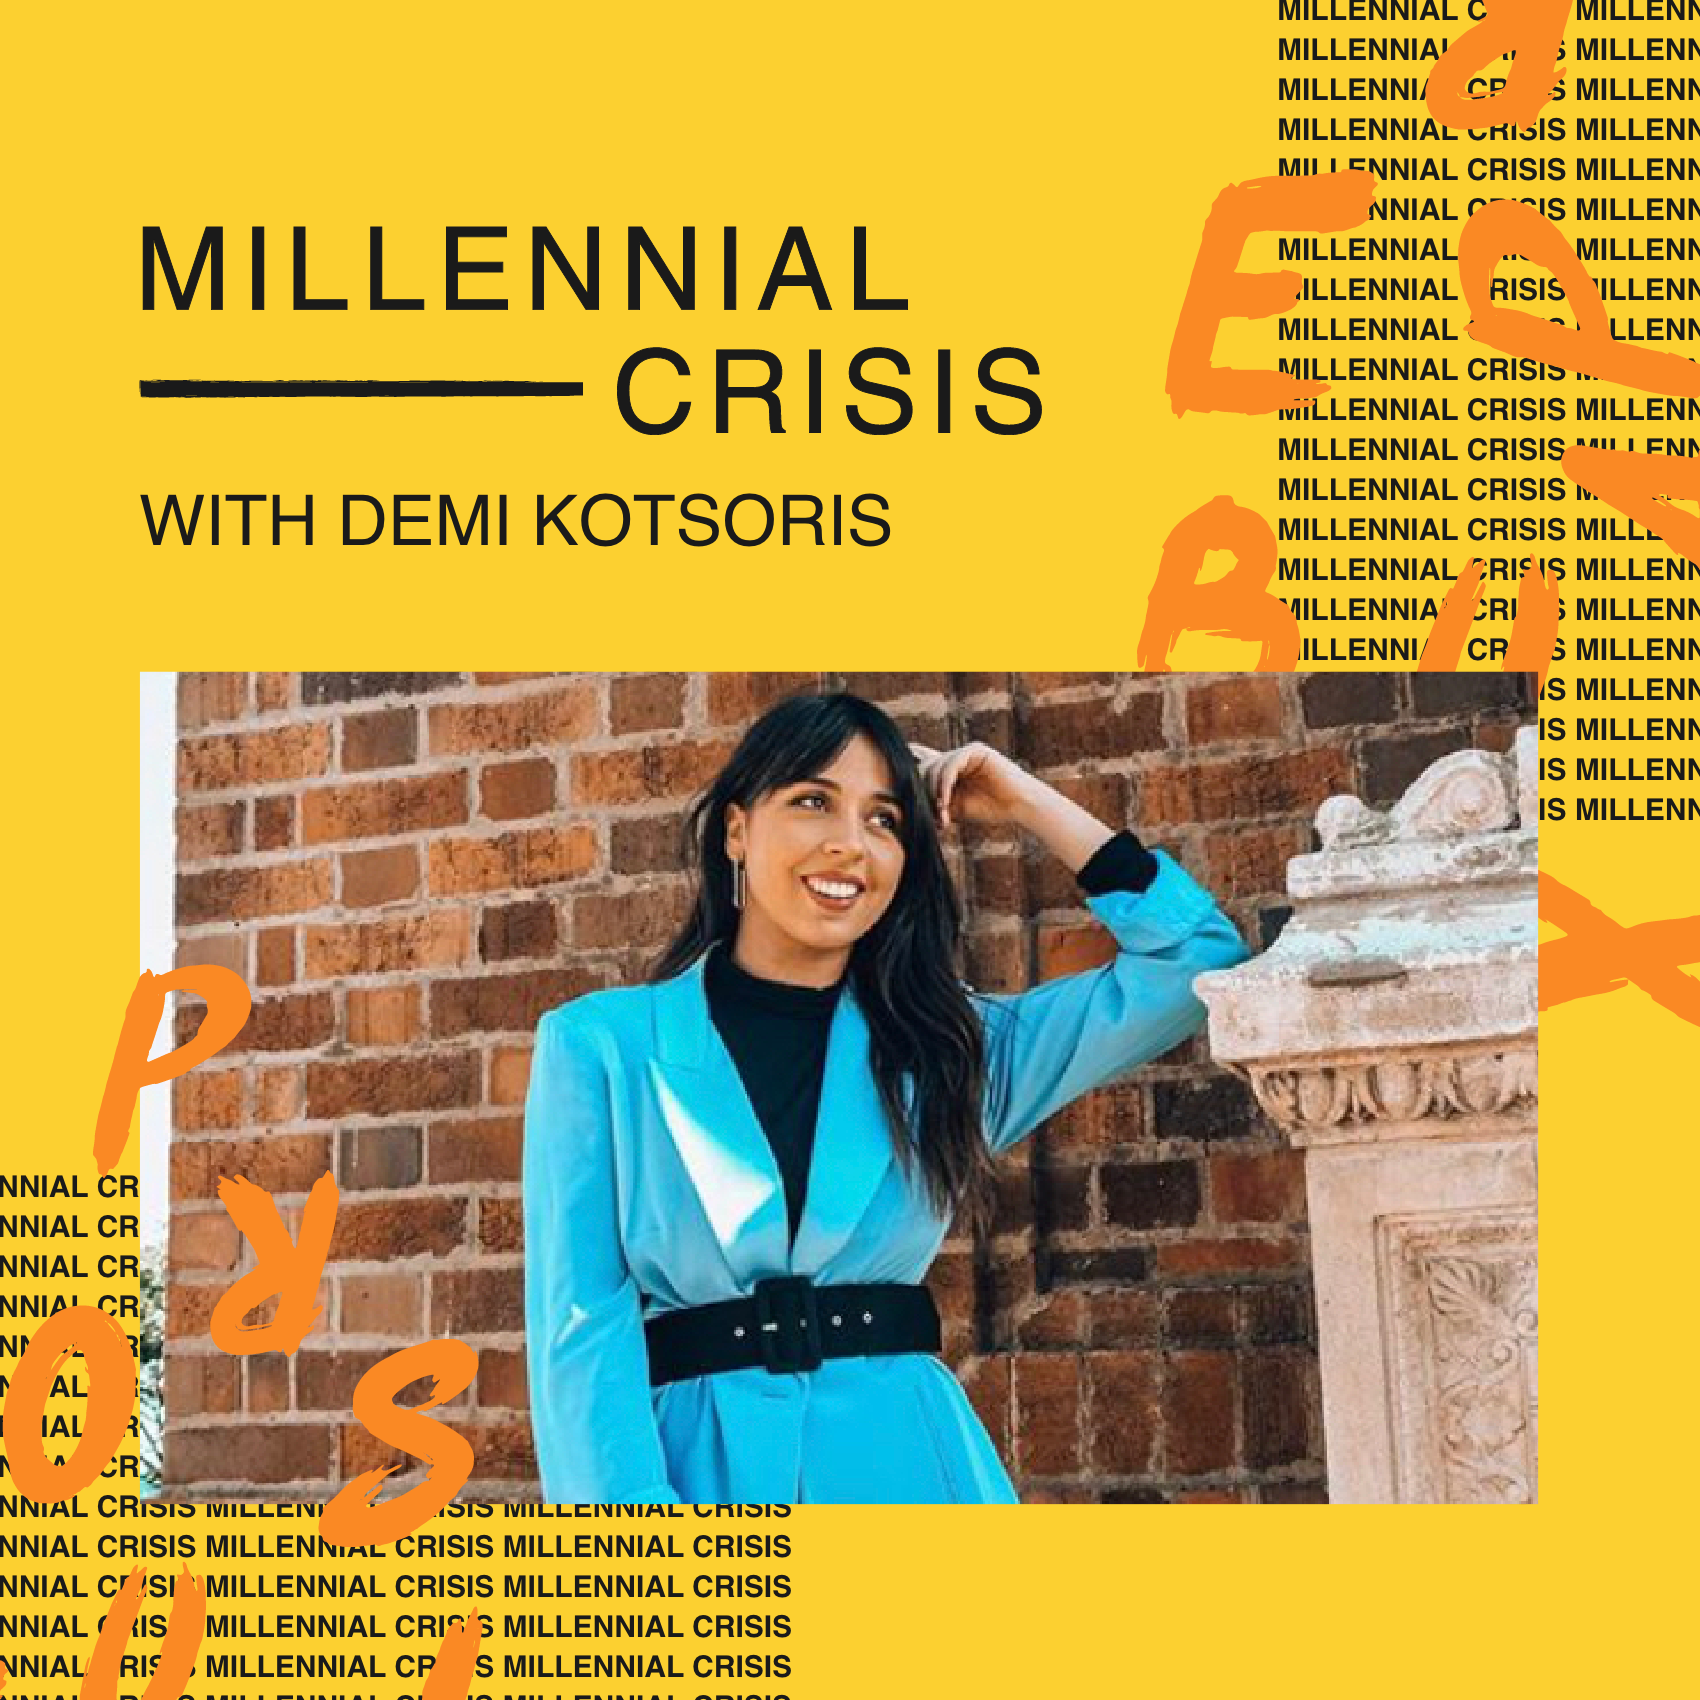 The Millennial Crisis